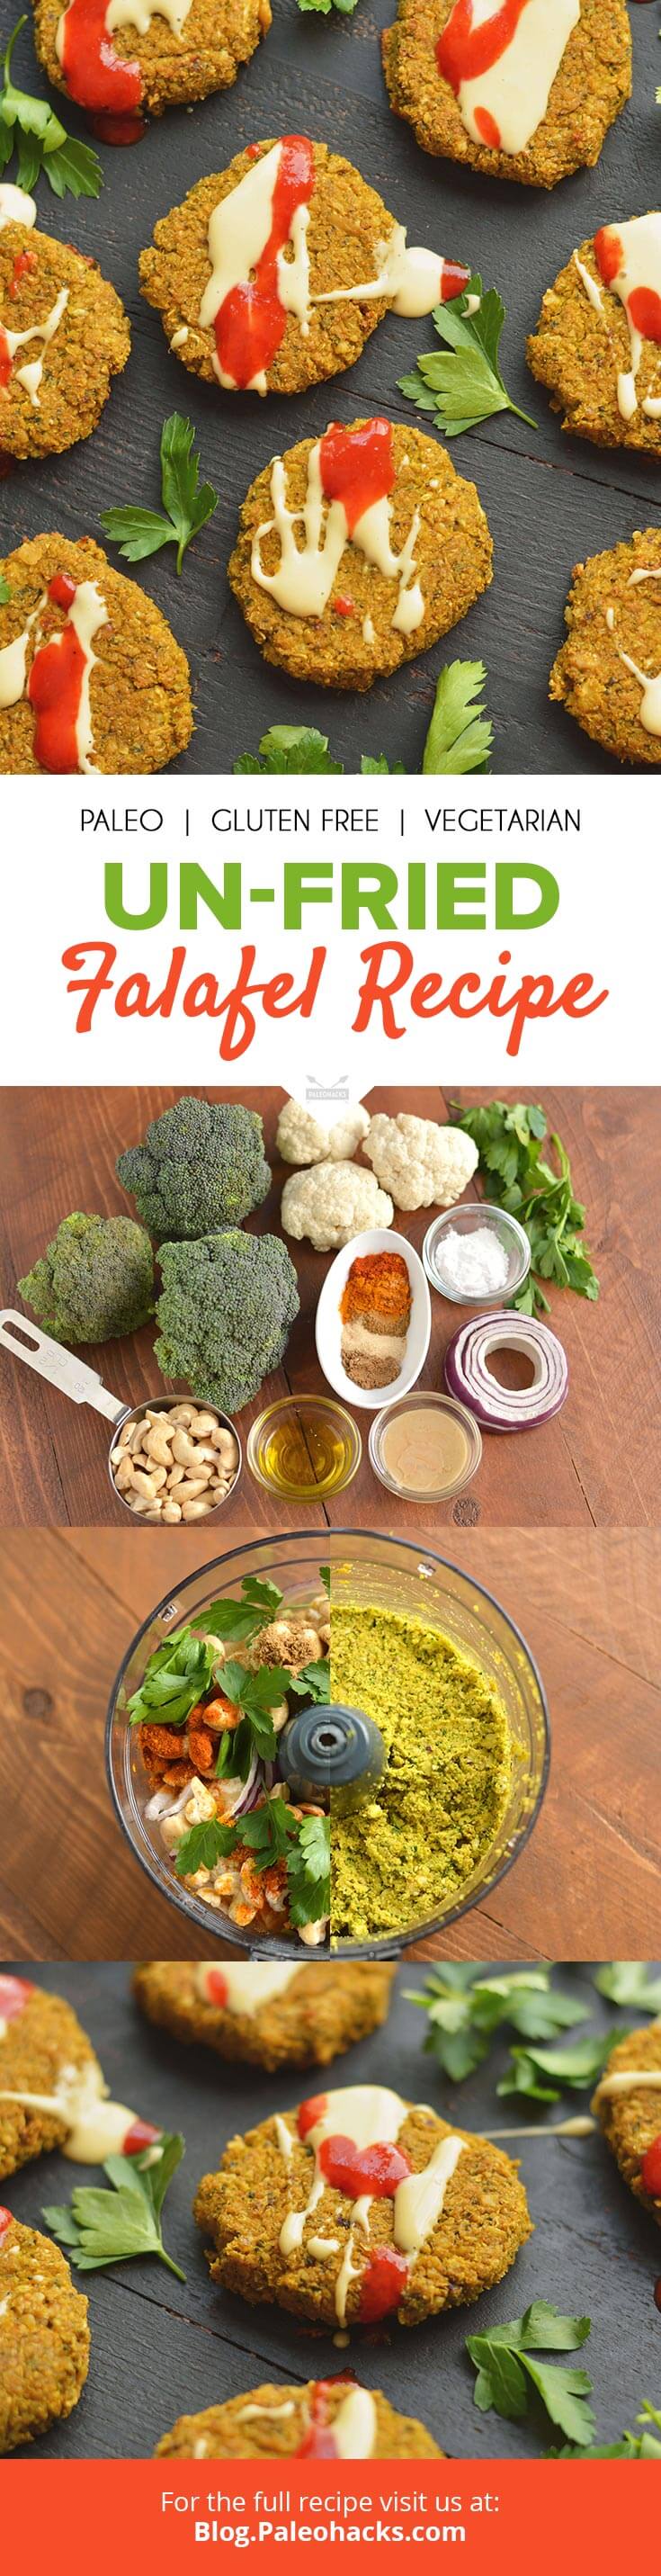 falafel recipe pin